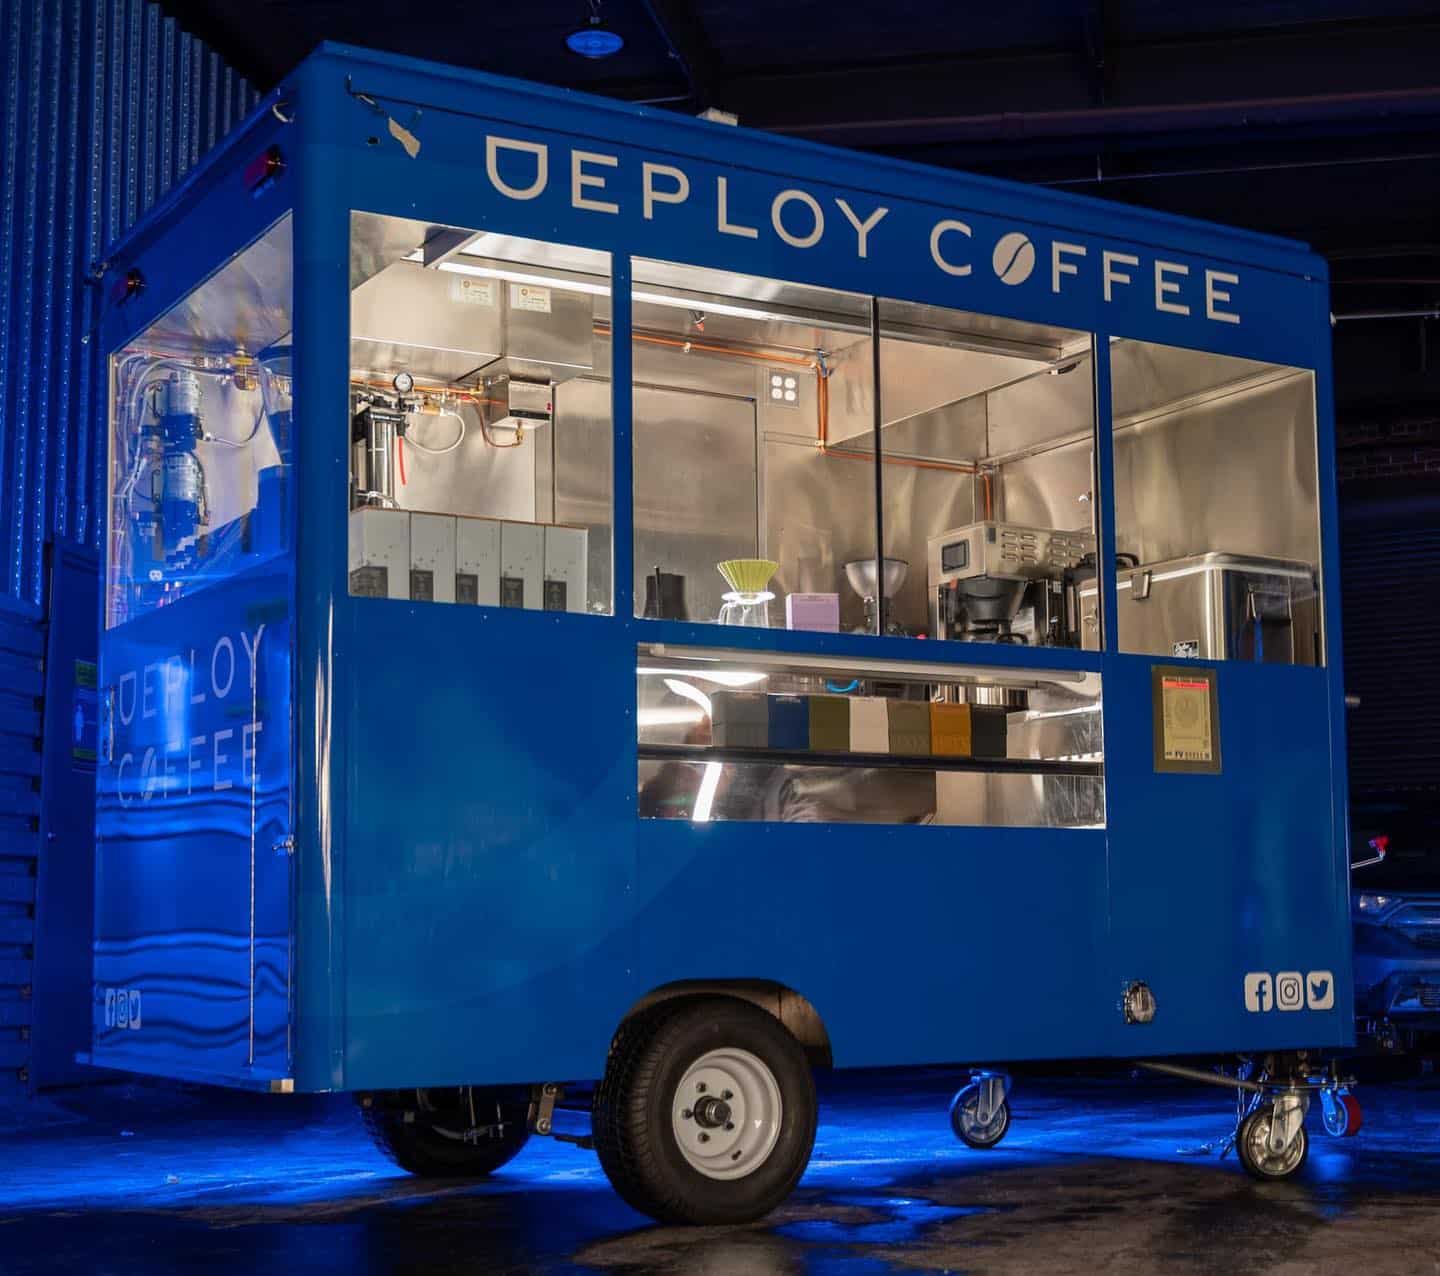 Deploy Coffee Cart